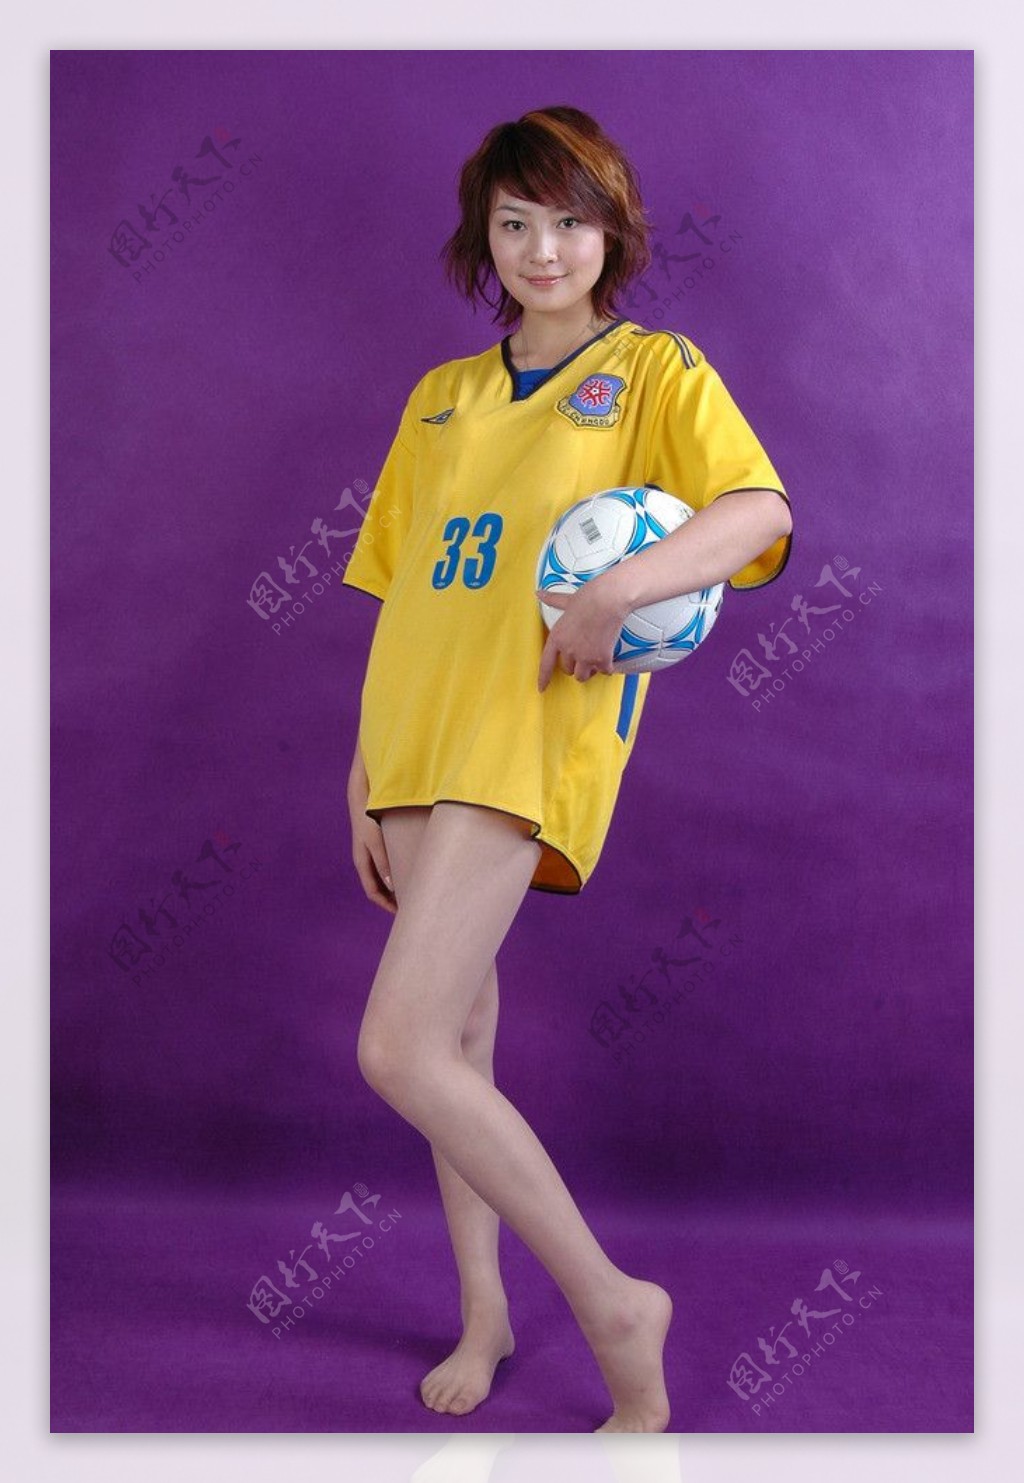 3D 美女 足球宝贝 球衣 yoly莜莉 ipad 平板 电脑 壁纸_平板壁纸图片高清壁纸_墨鱼部落格